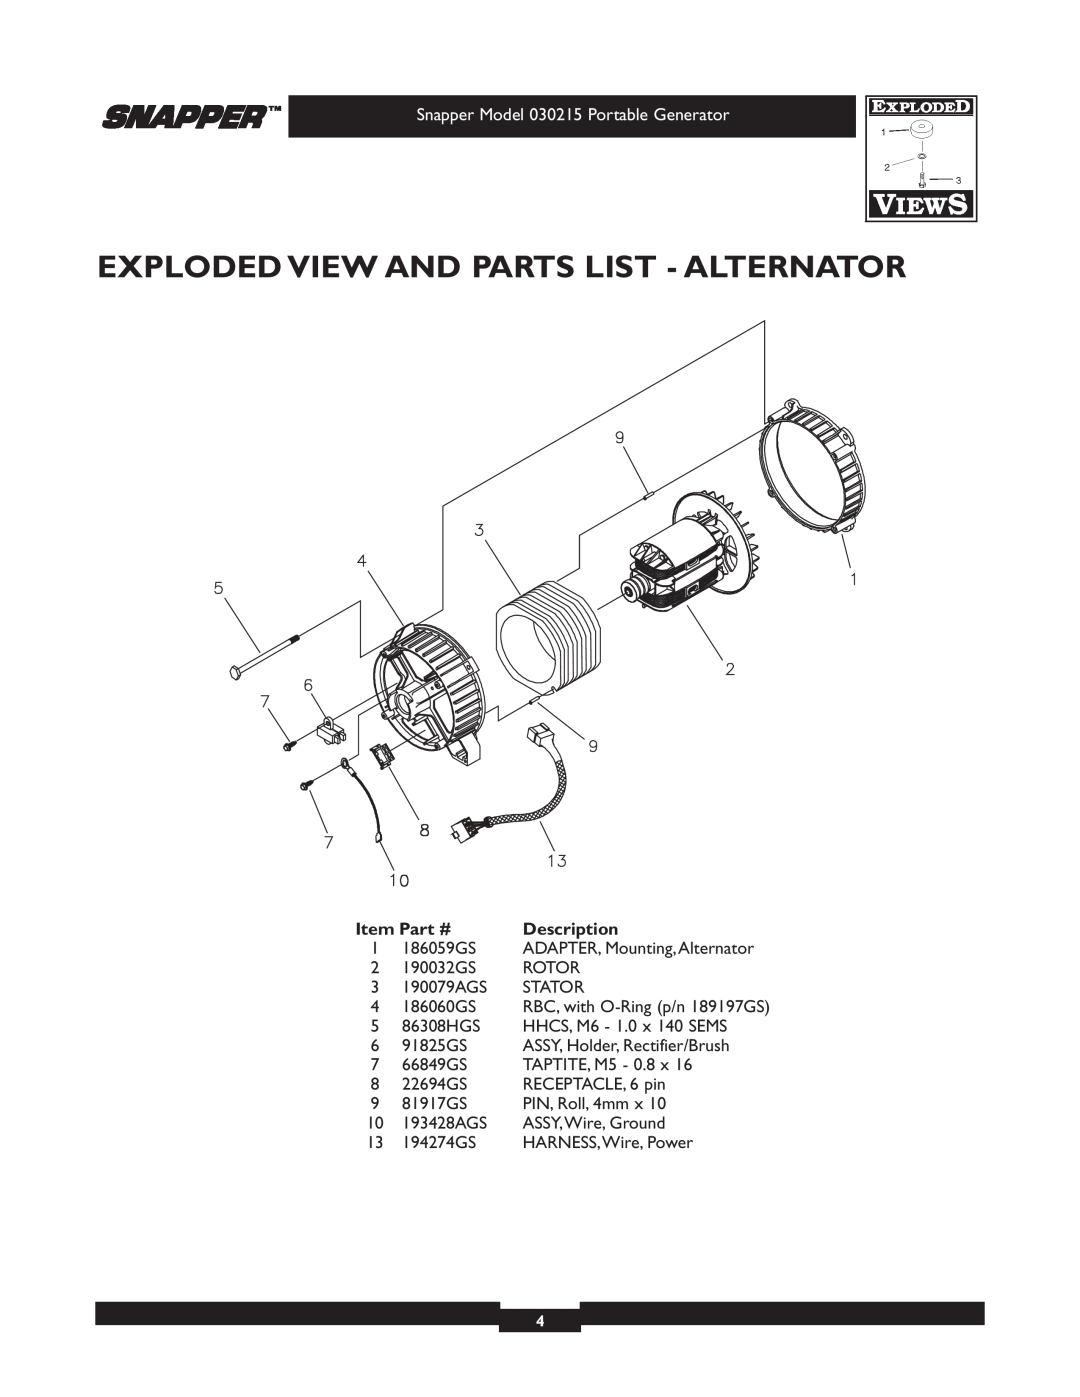 Snapper 5600 manual Exploded View And Parts List - Alternator, Snapper Model 030215 Portable Generator, Description 